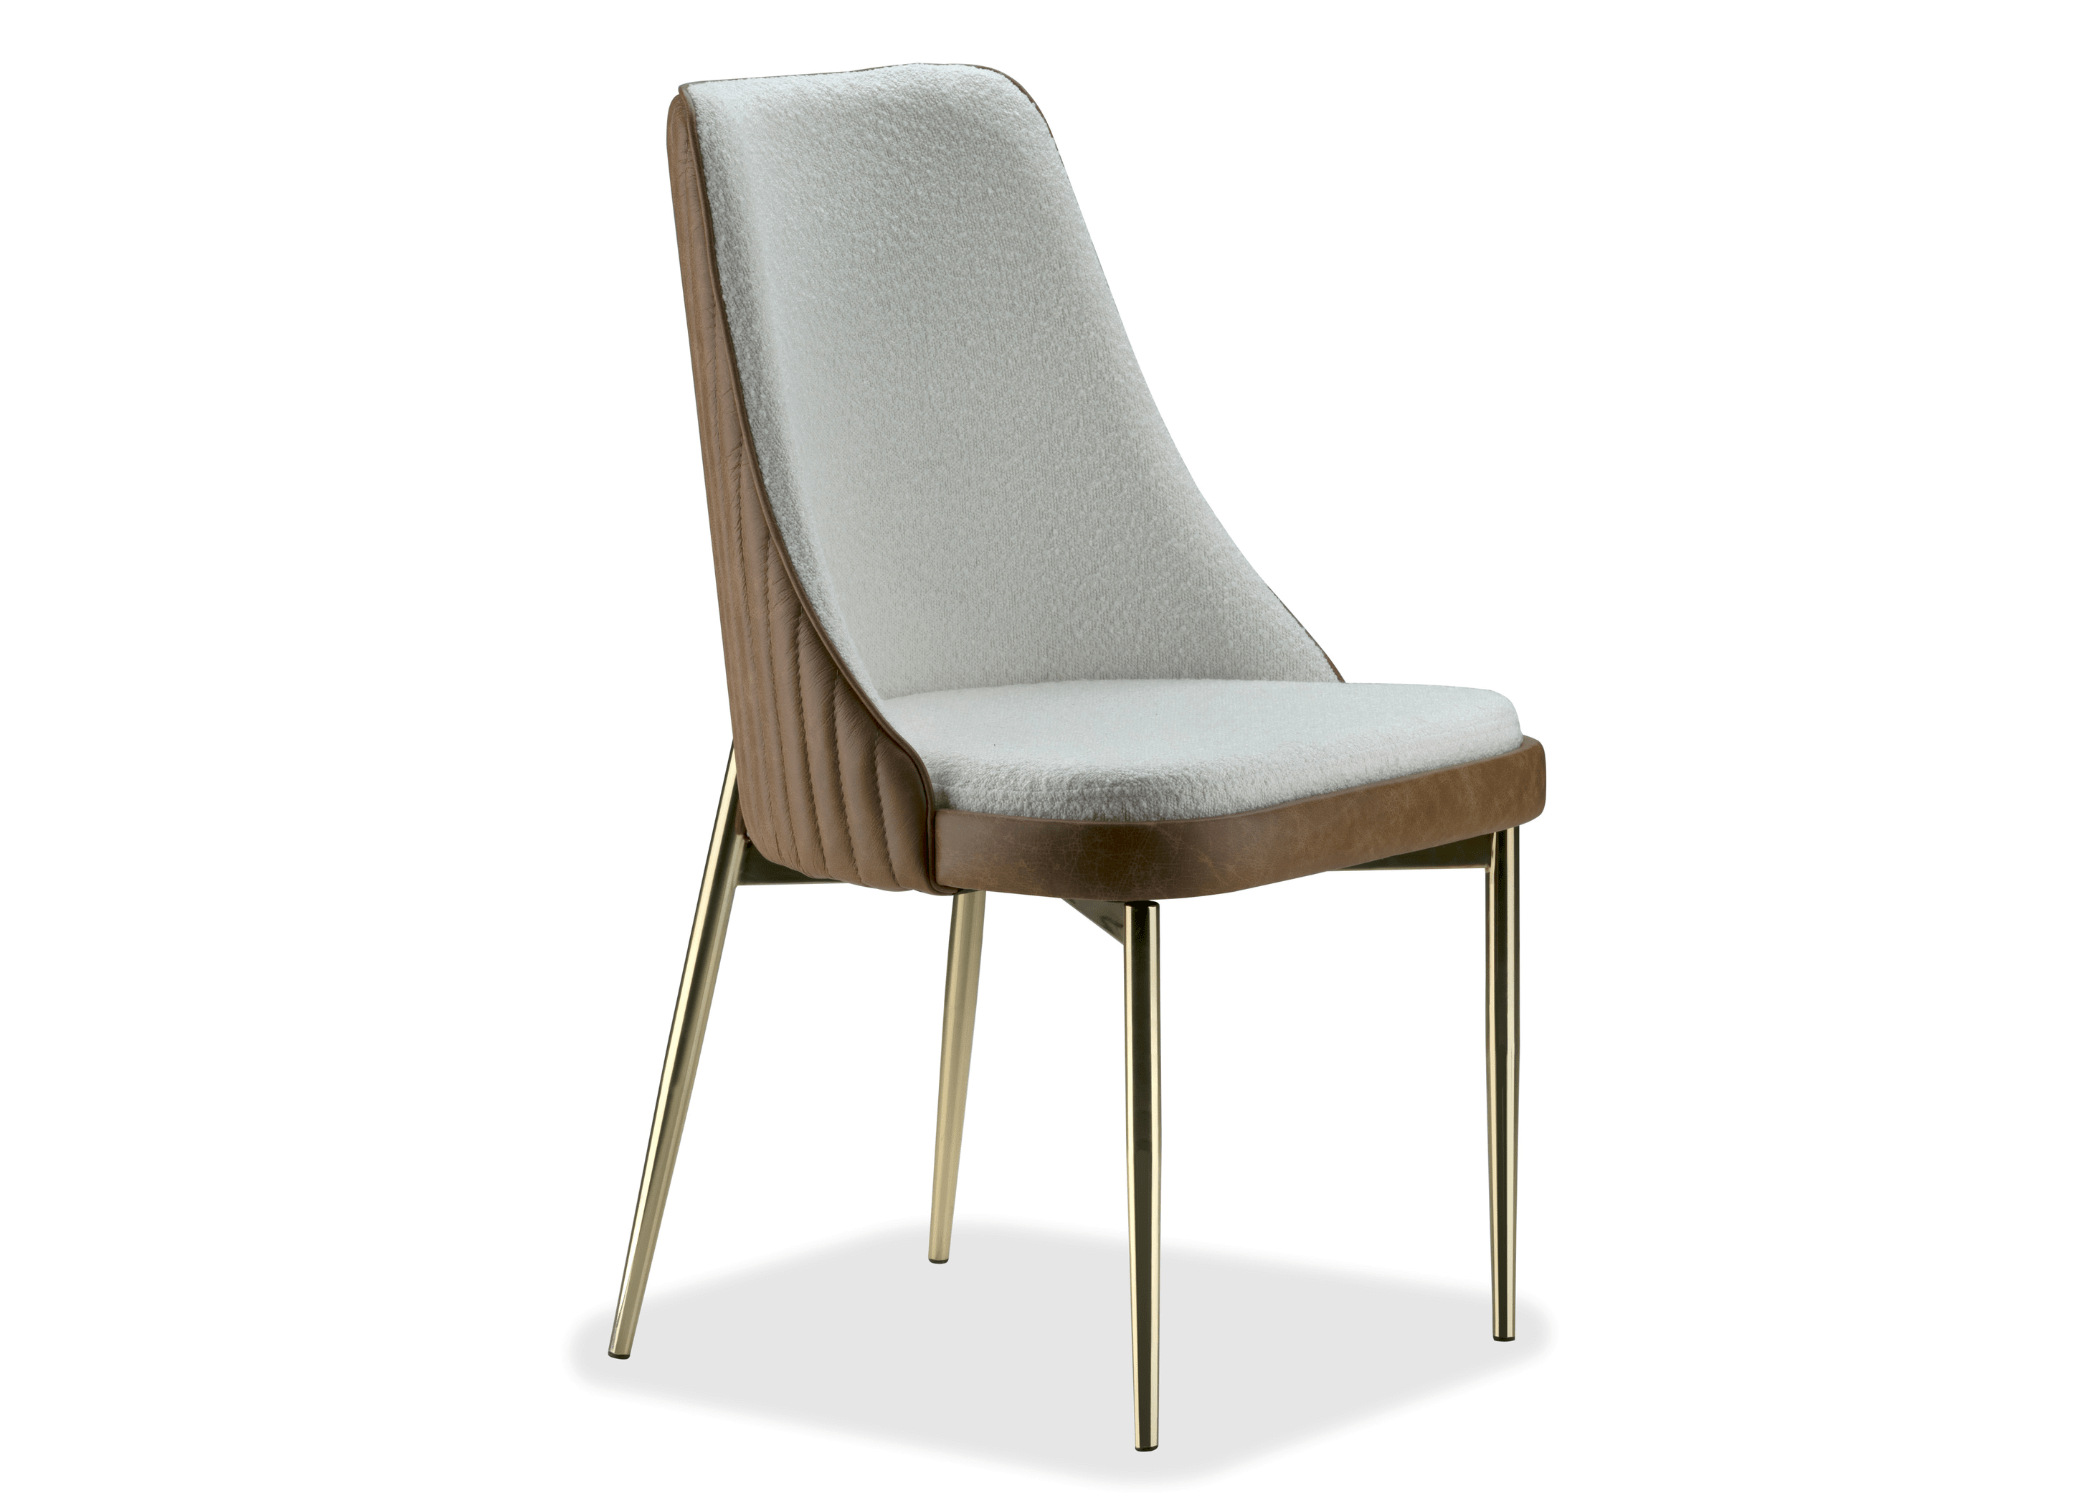 Cadeira Giz: estrutura de aço carbono pintado para durabilidade.